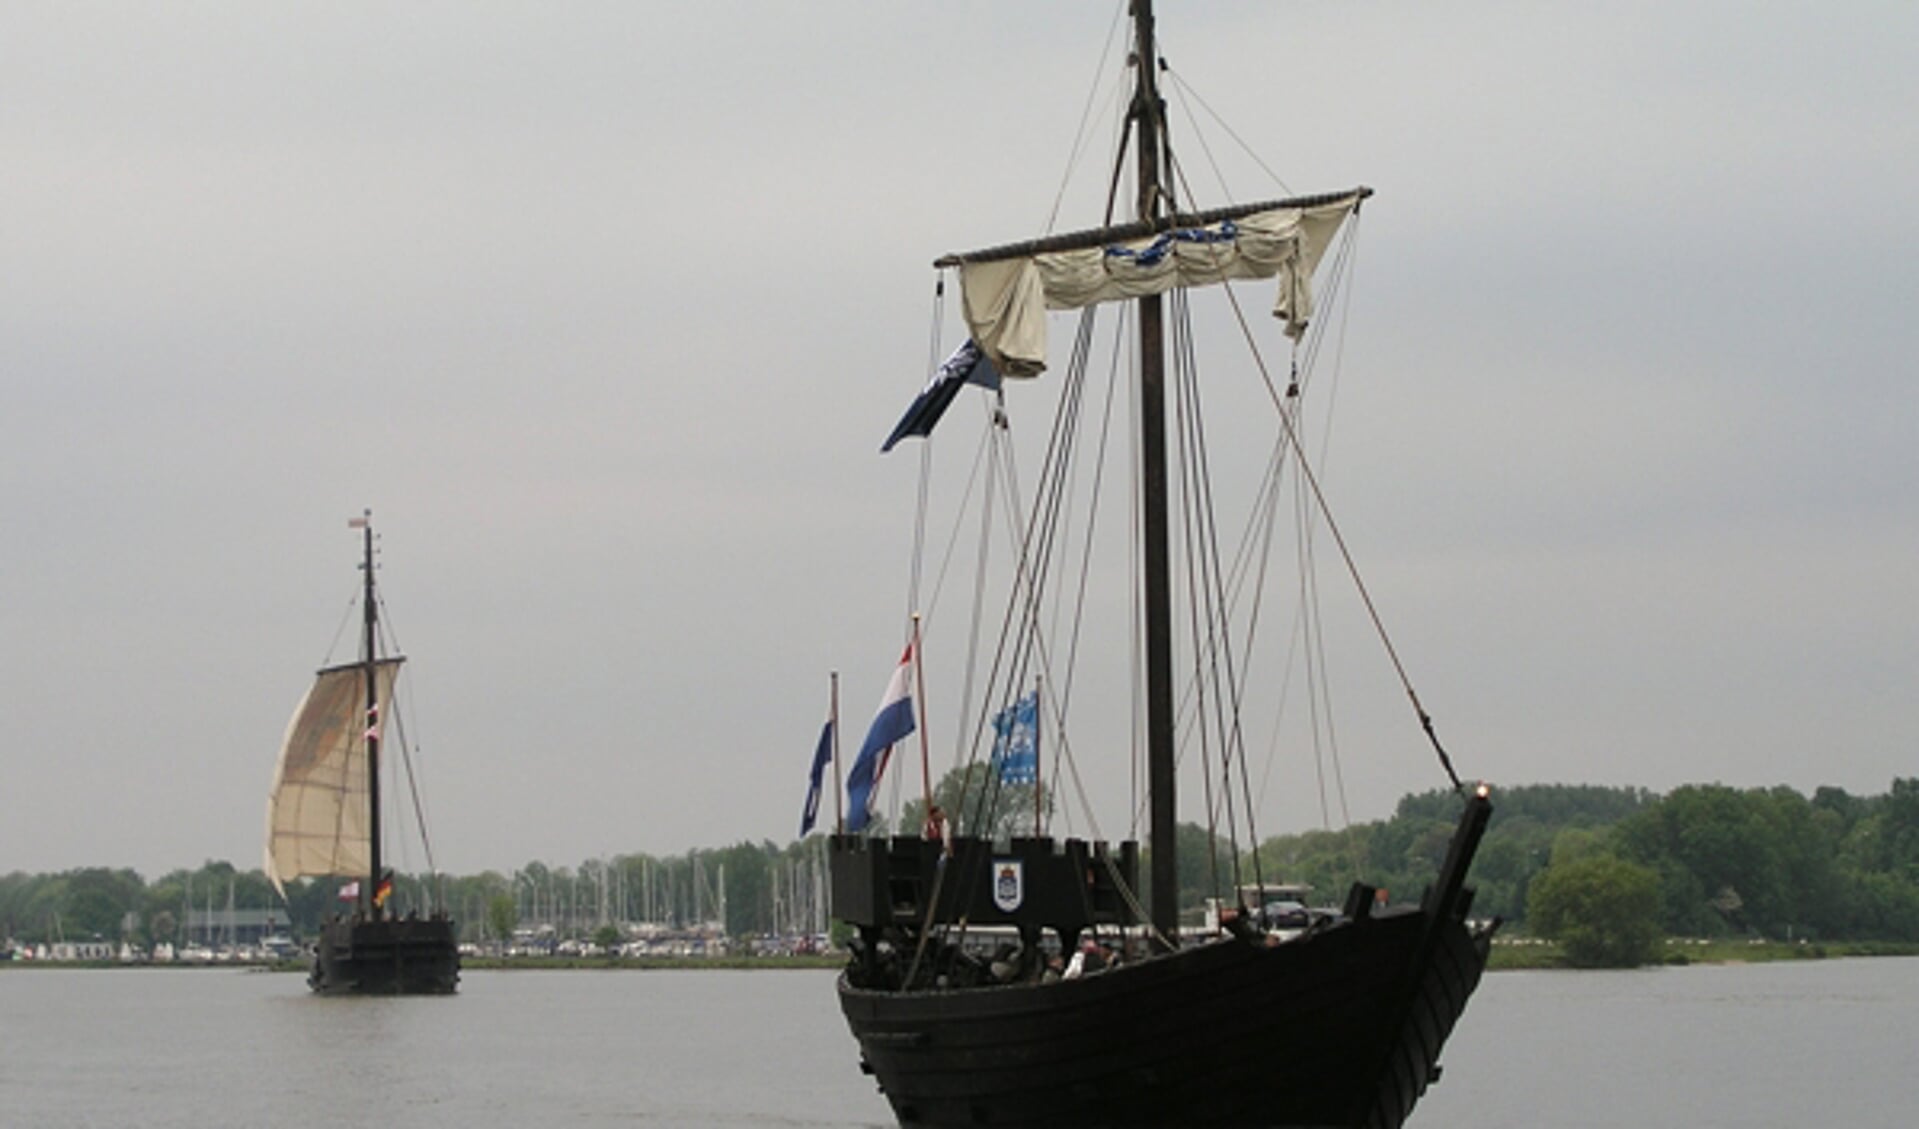 Koggetreffen aan de IJsselkade in Kampen, 2009.